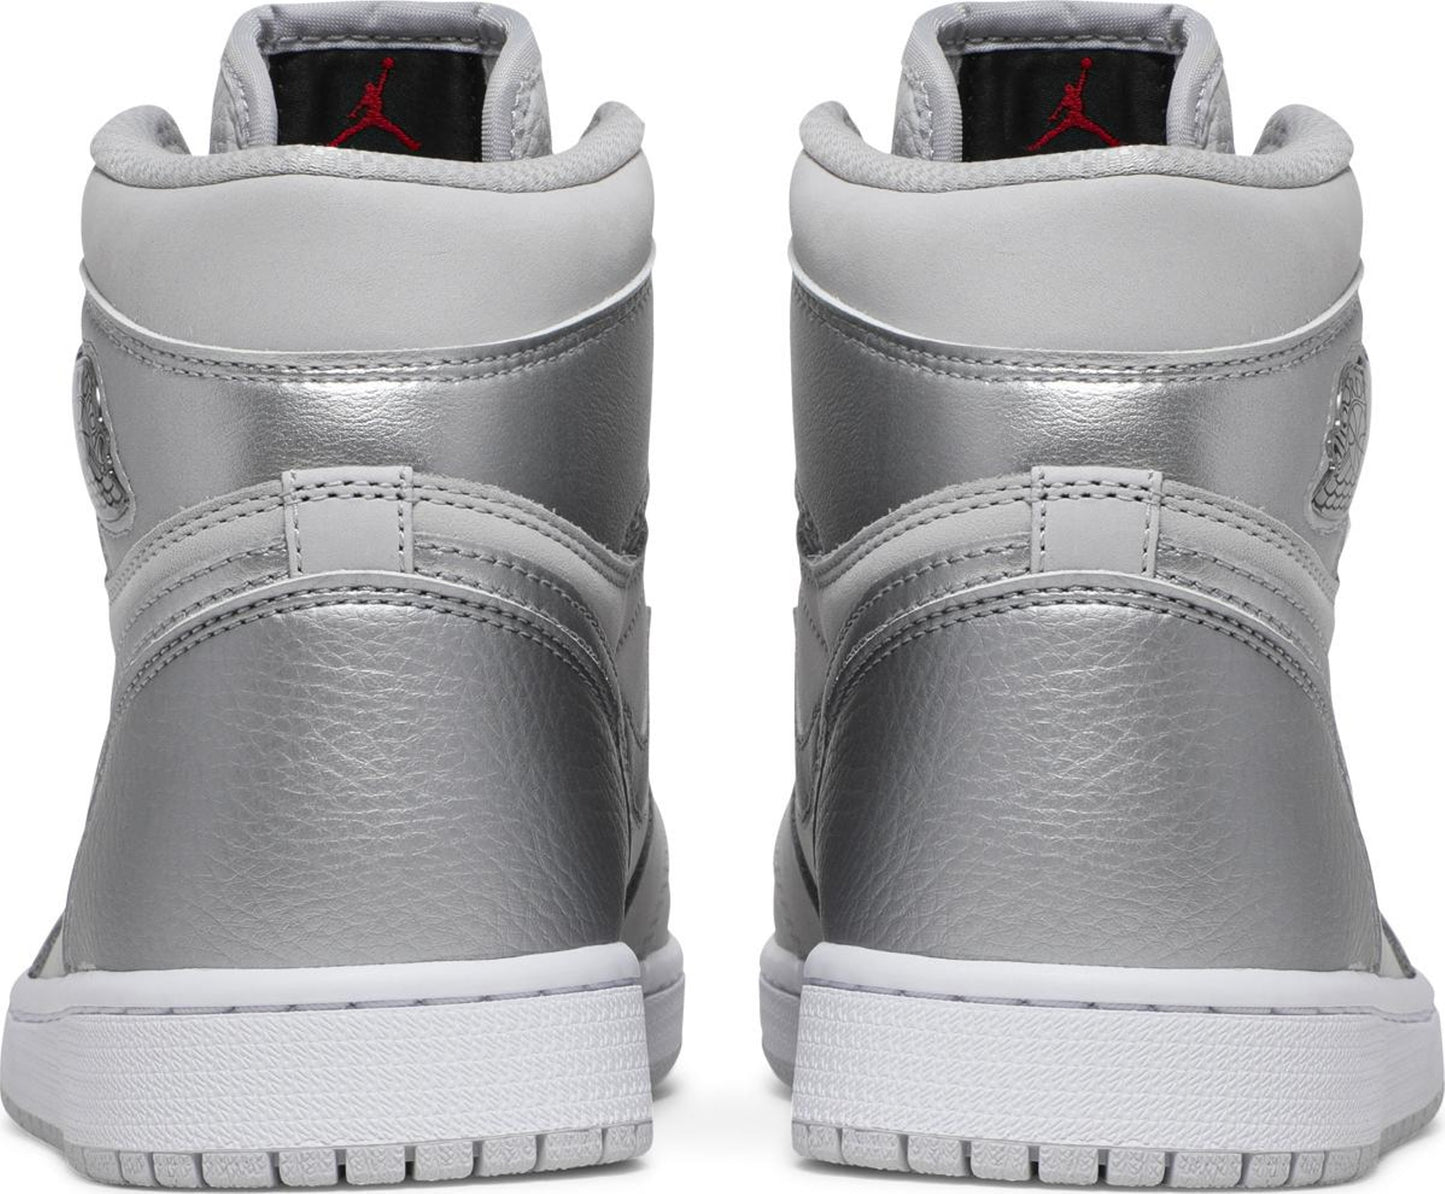 NIKE x AIR JORDAN - Nike Air Jordan 1 Retro High OG CO Japan Neutral Grey Sneakers (2020)